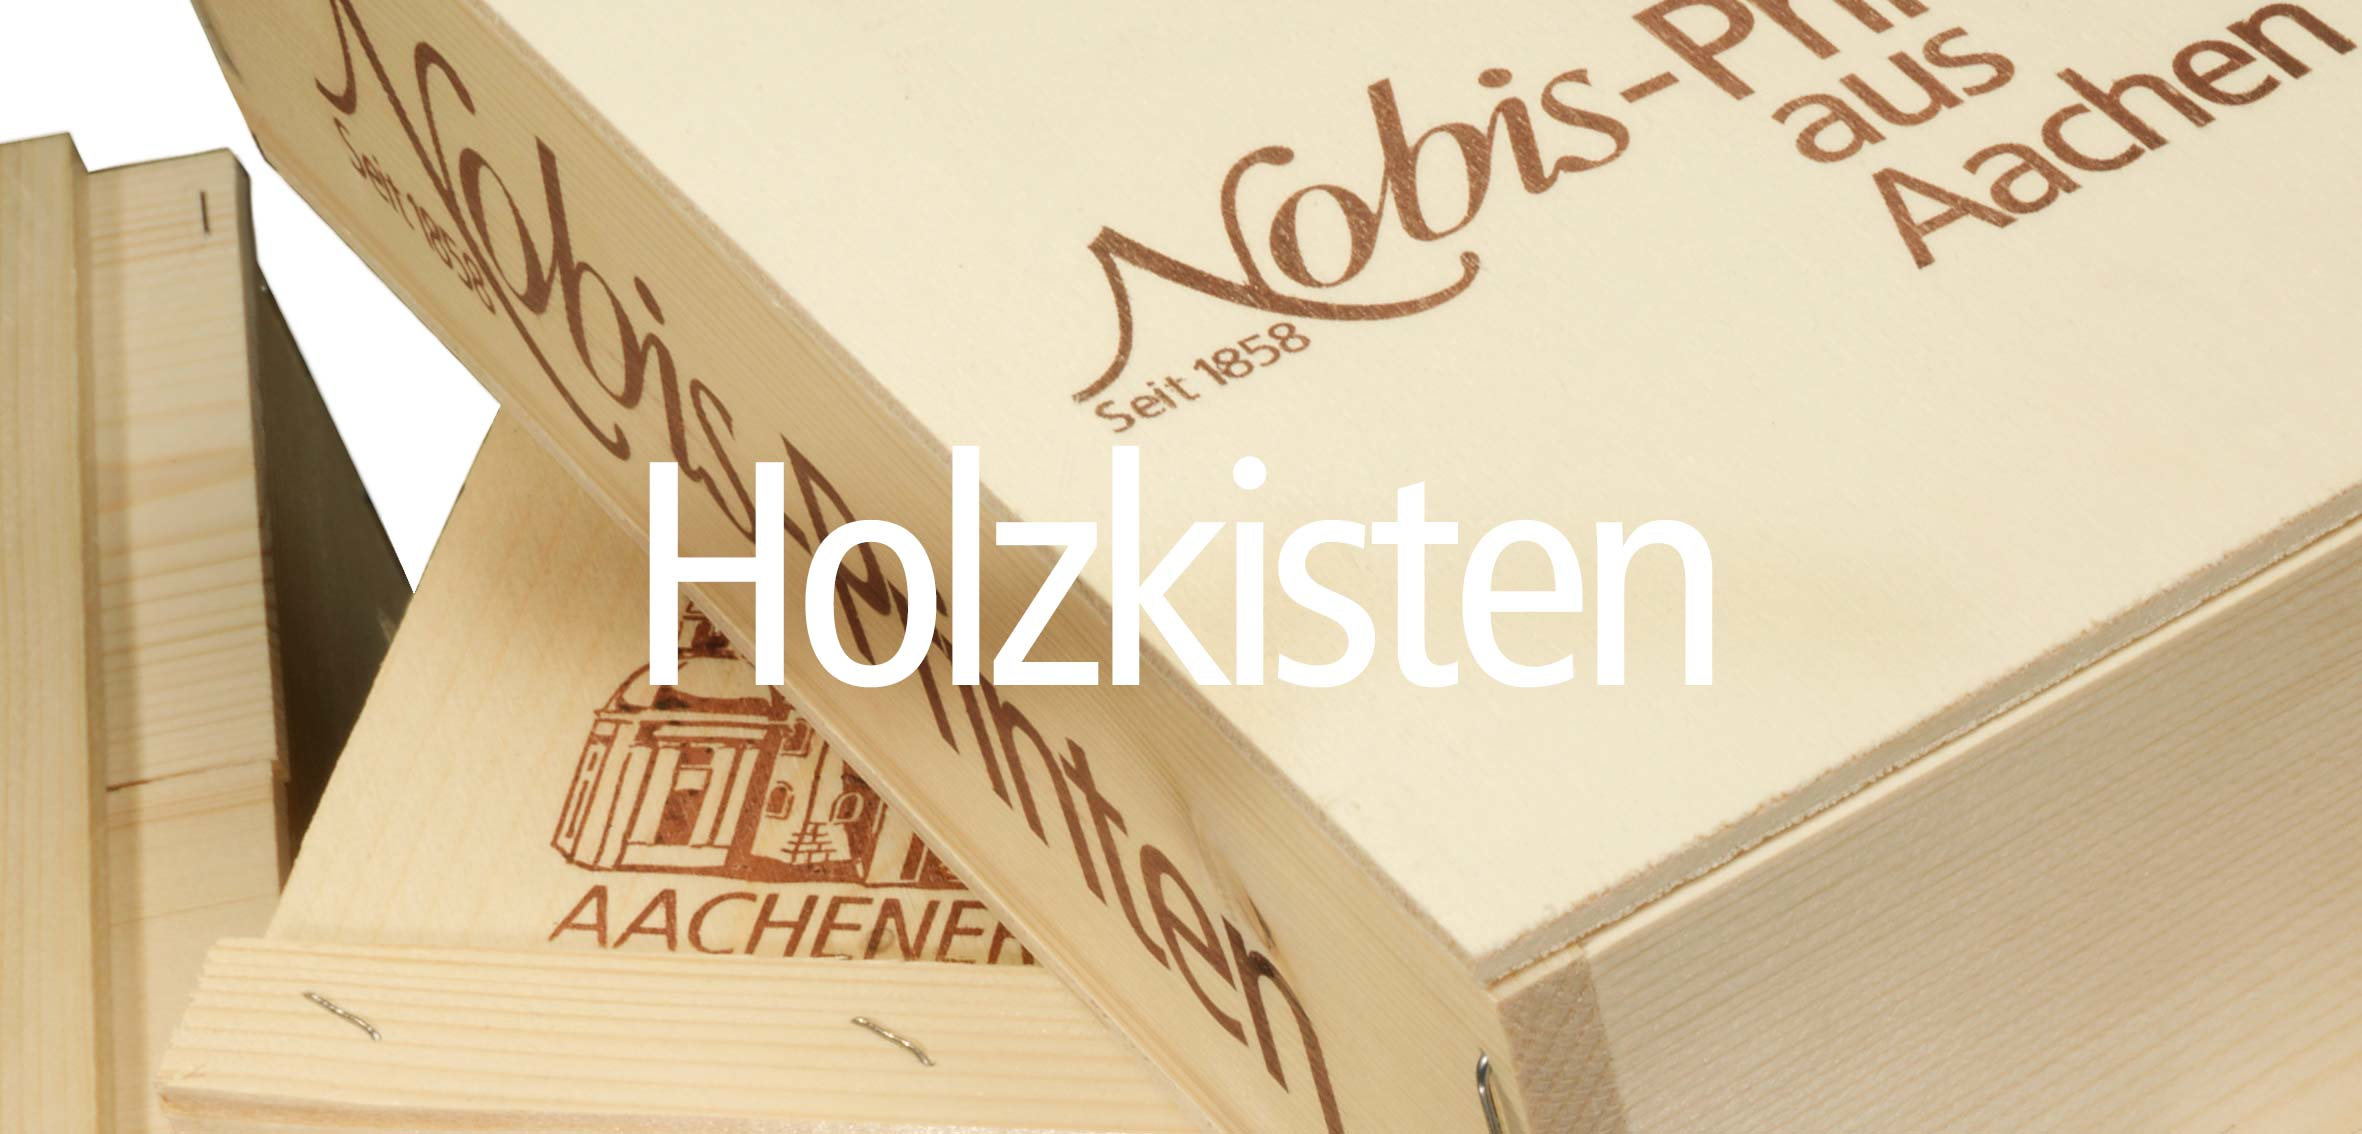 nobis-aachen-holzkisten